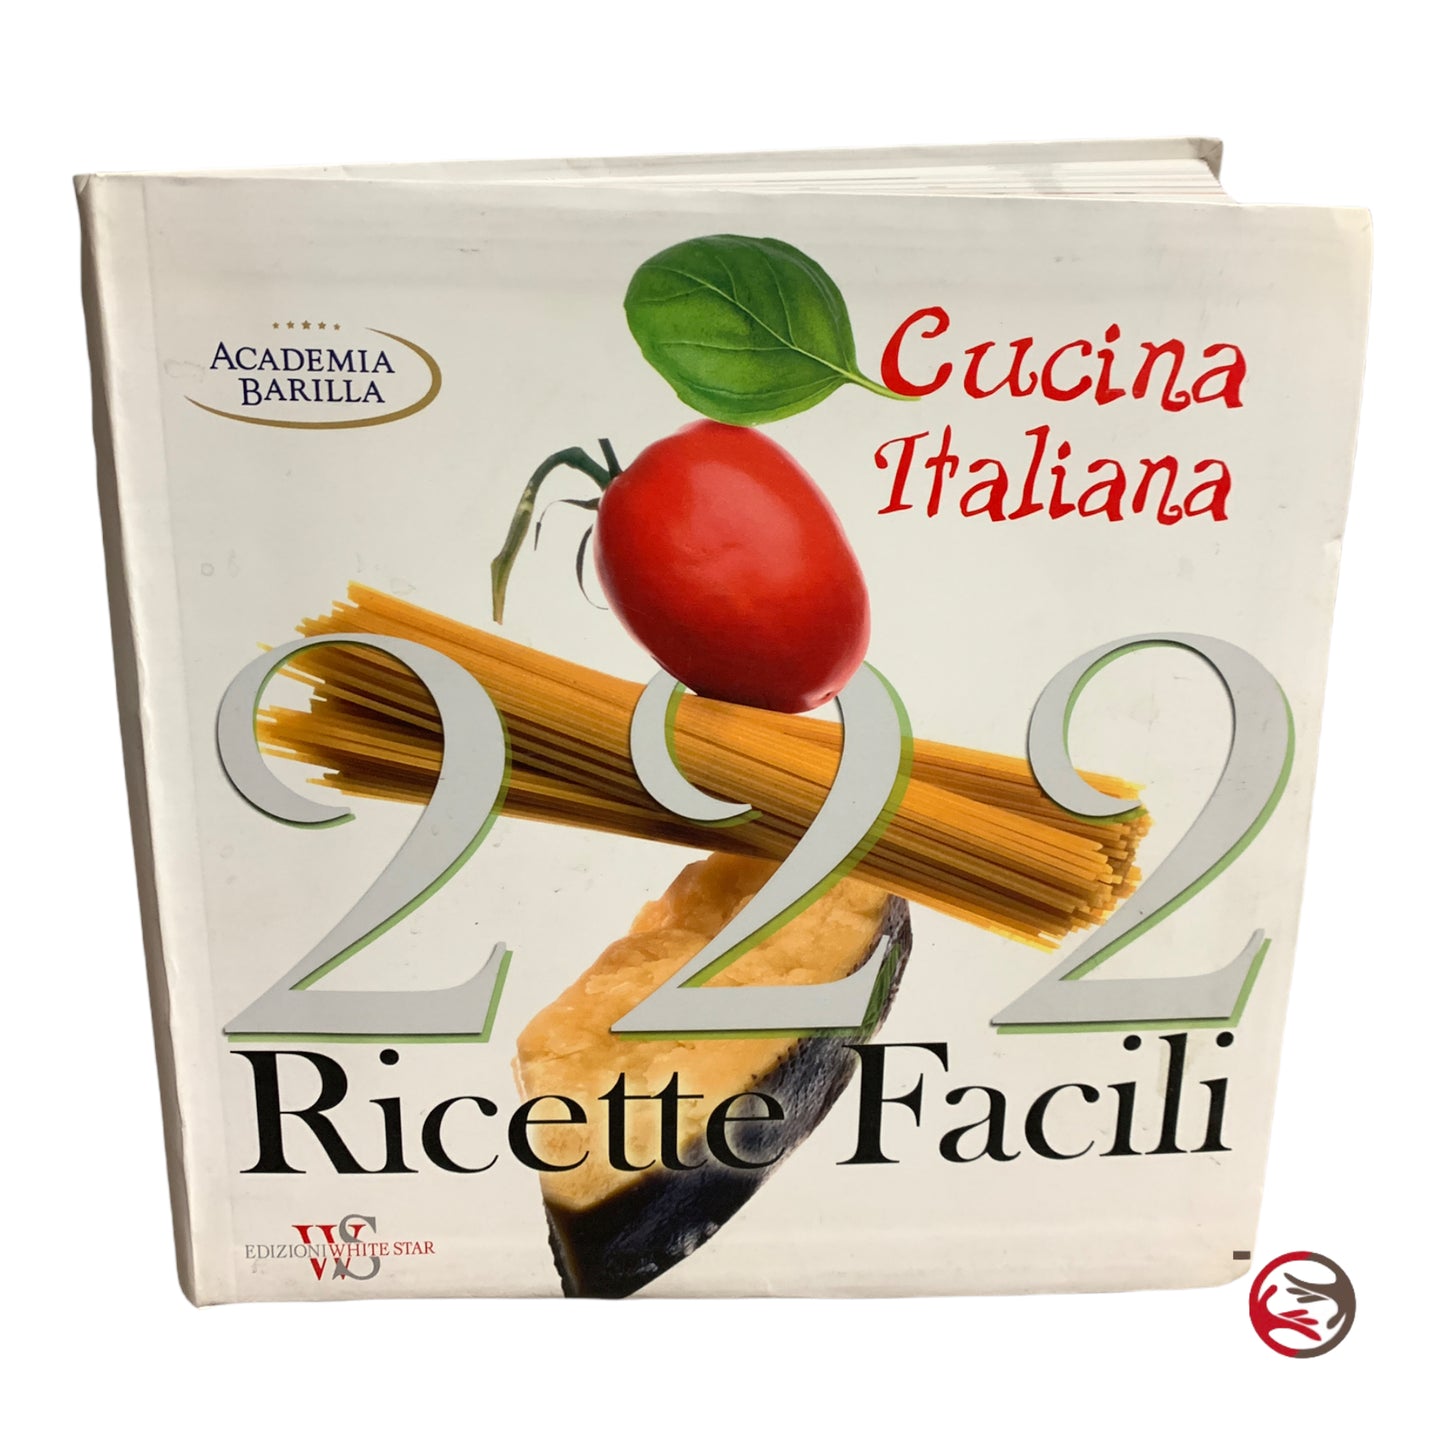 222 easy recipes of Italian cuisine